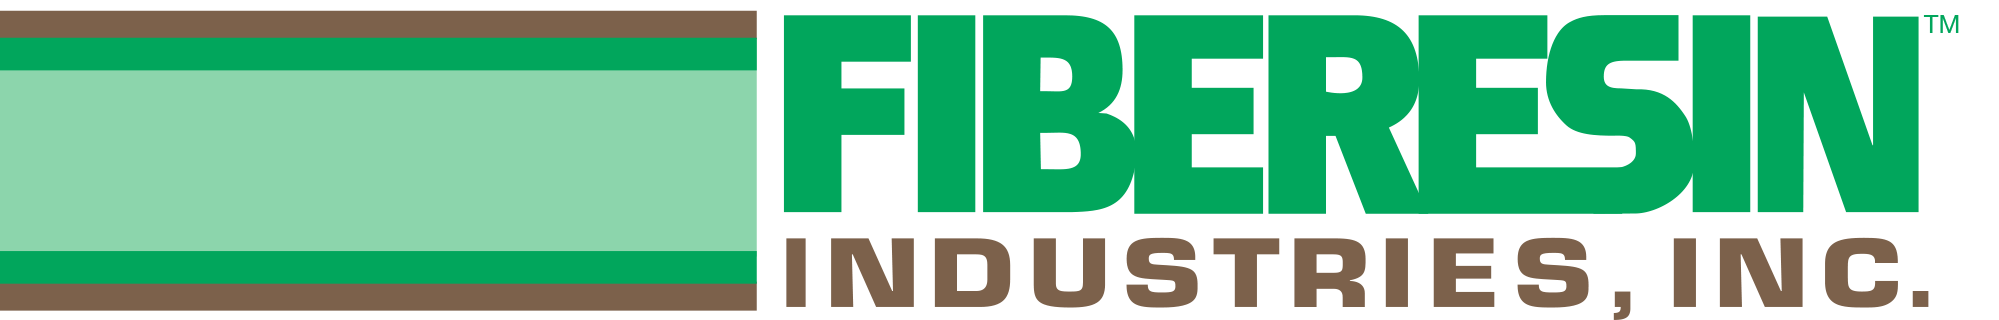 Fiberesin Logo HighRes